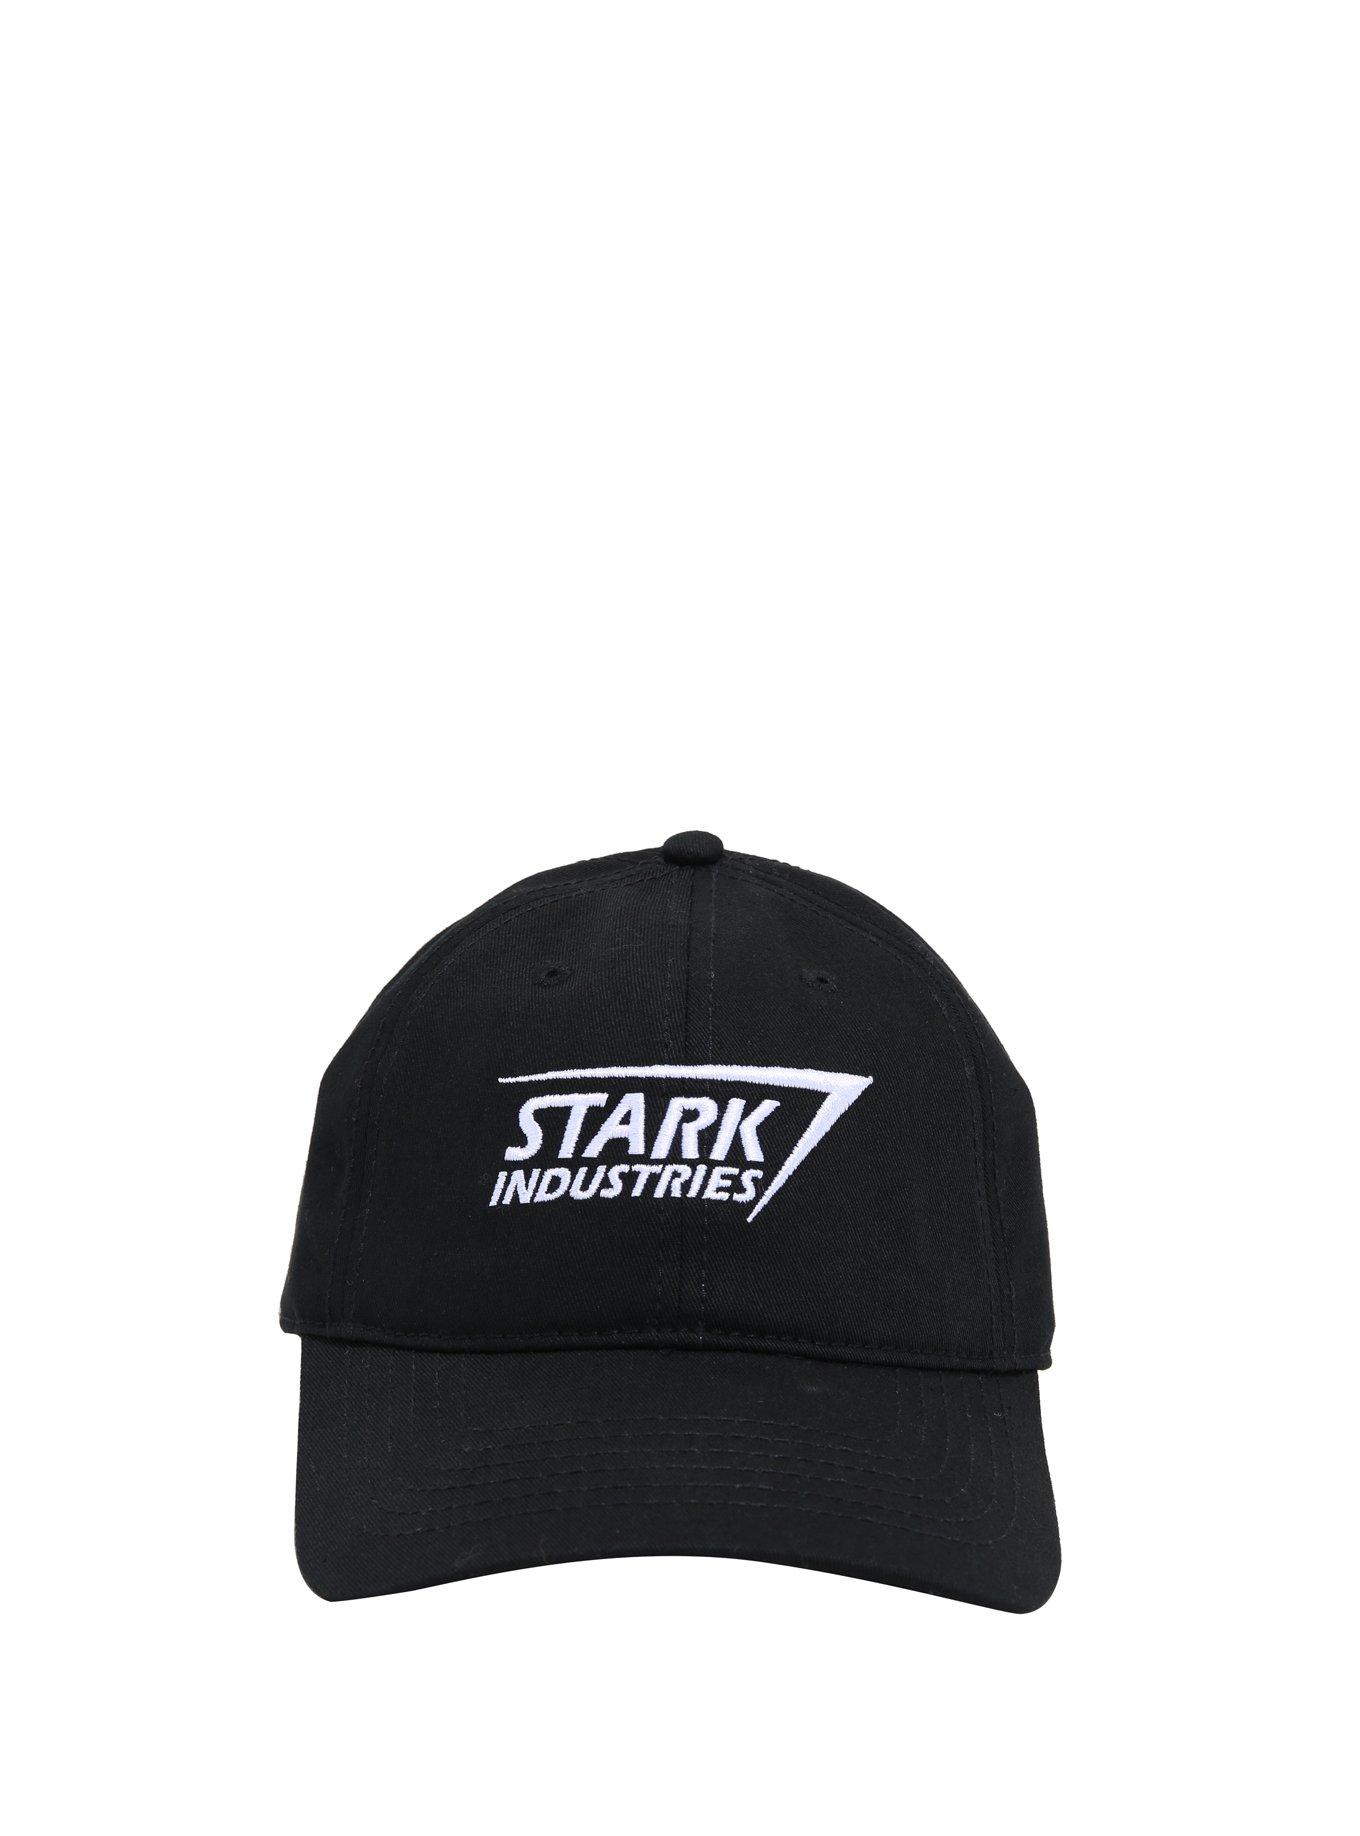 Marvel Iron Man Stark Industries Dad Cap Black, , alternate